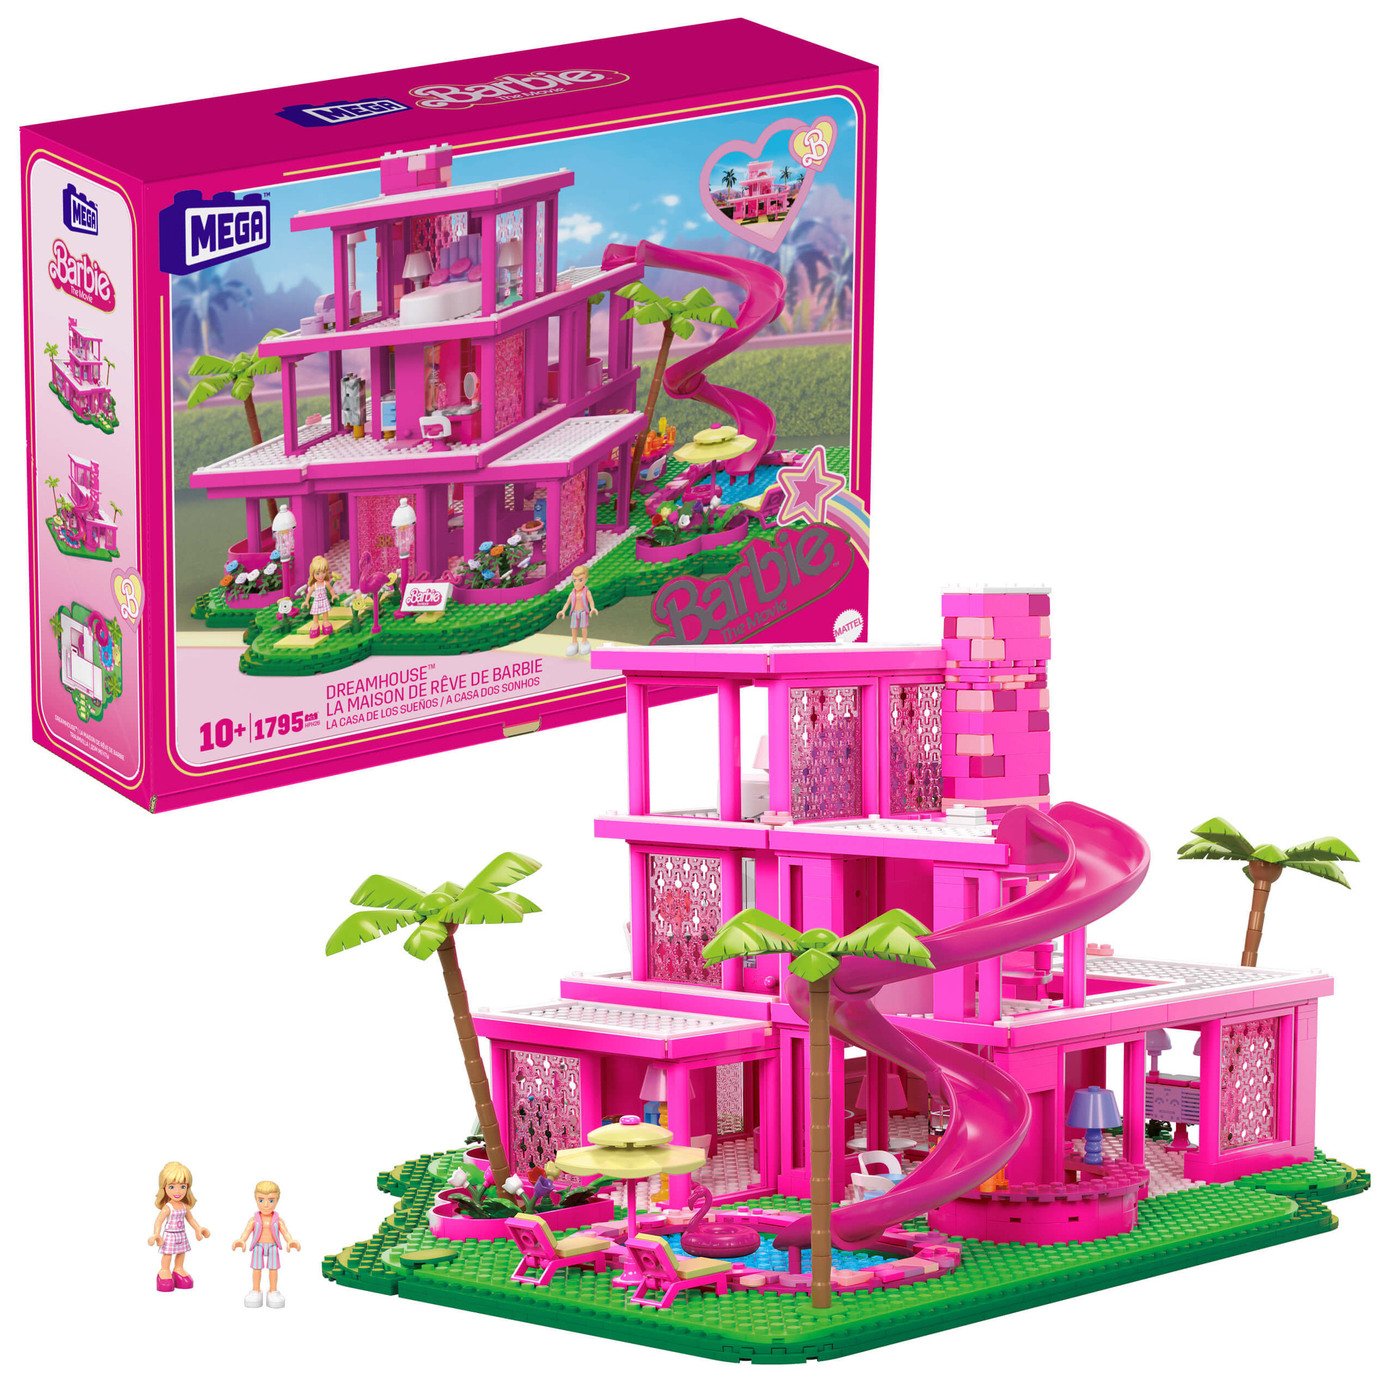 Mega Barbie Building Set - Dream House